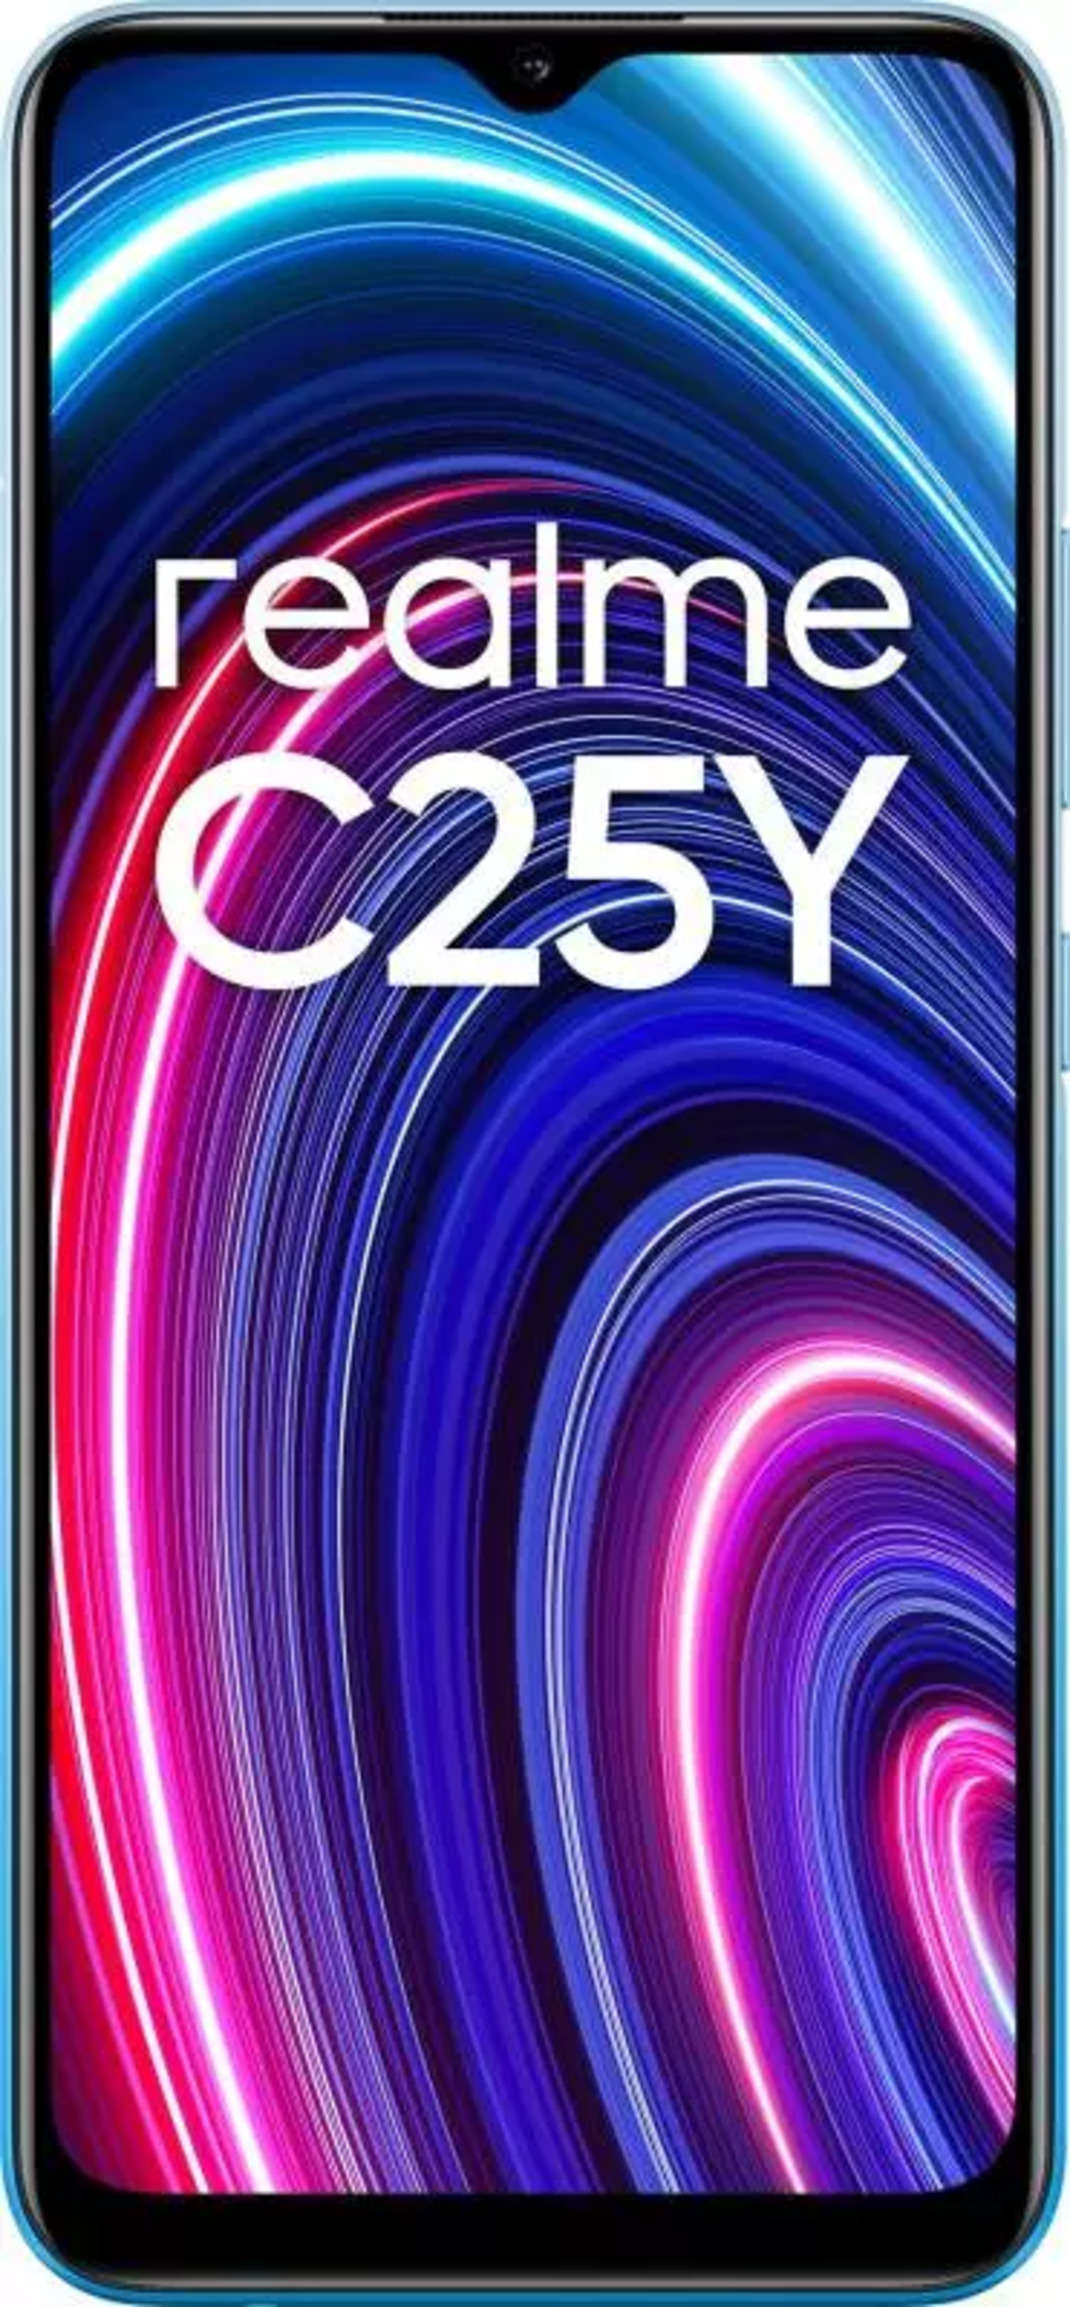 Realme c25y price in malaysia